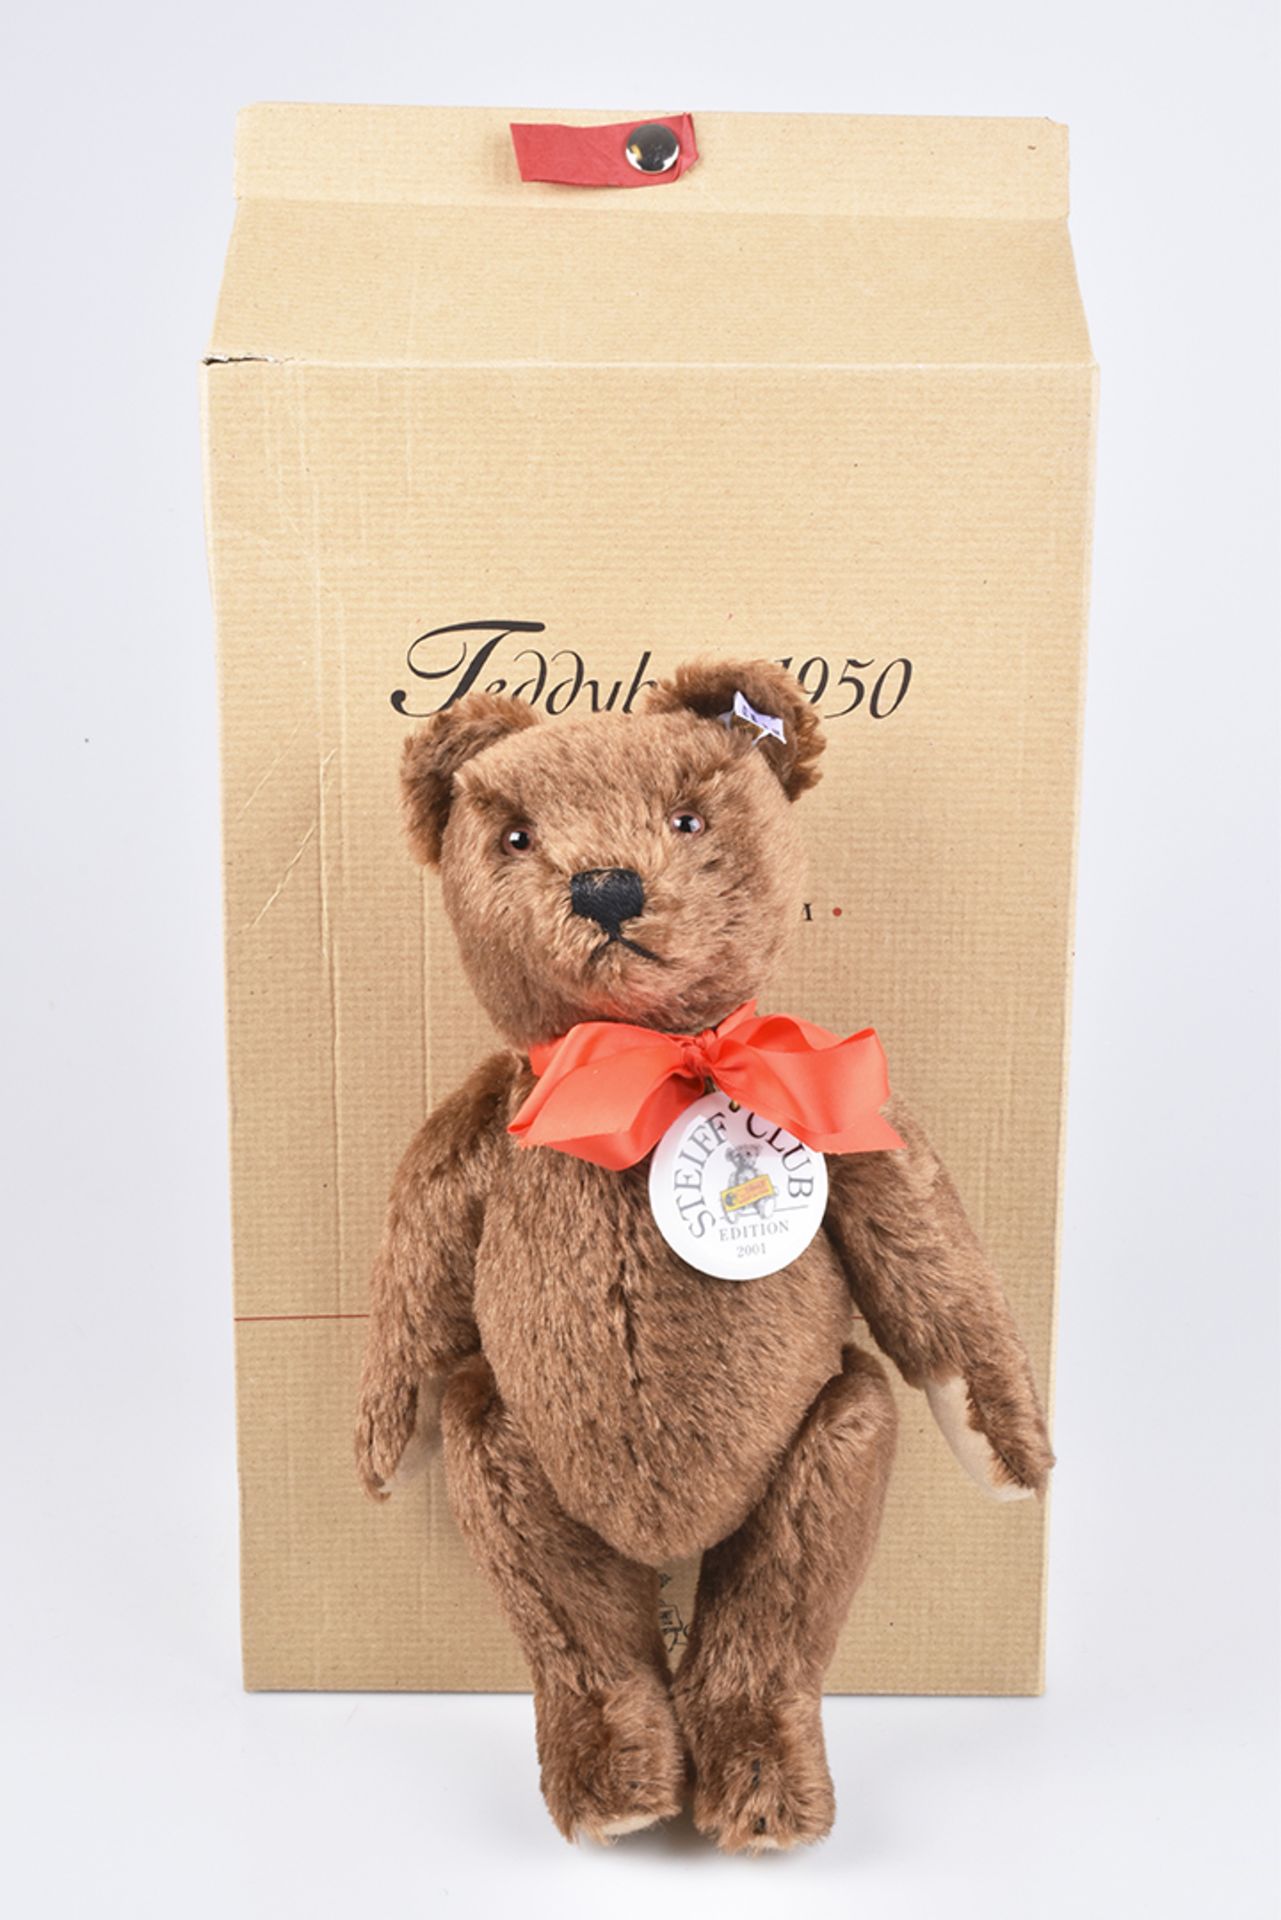 STEIFF Teddybär 1950Steiff Club Edition, mit Zertifikat, KF, mit Porzellanmarke, Nr. 420245, Mohair,